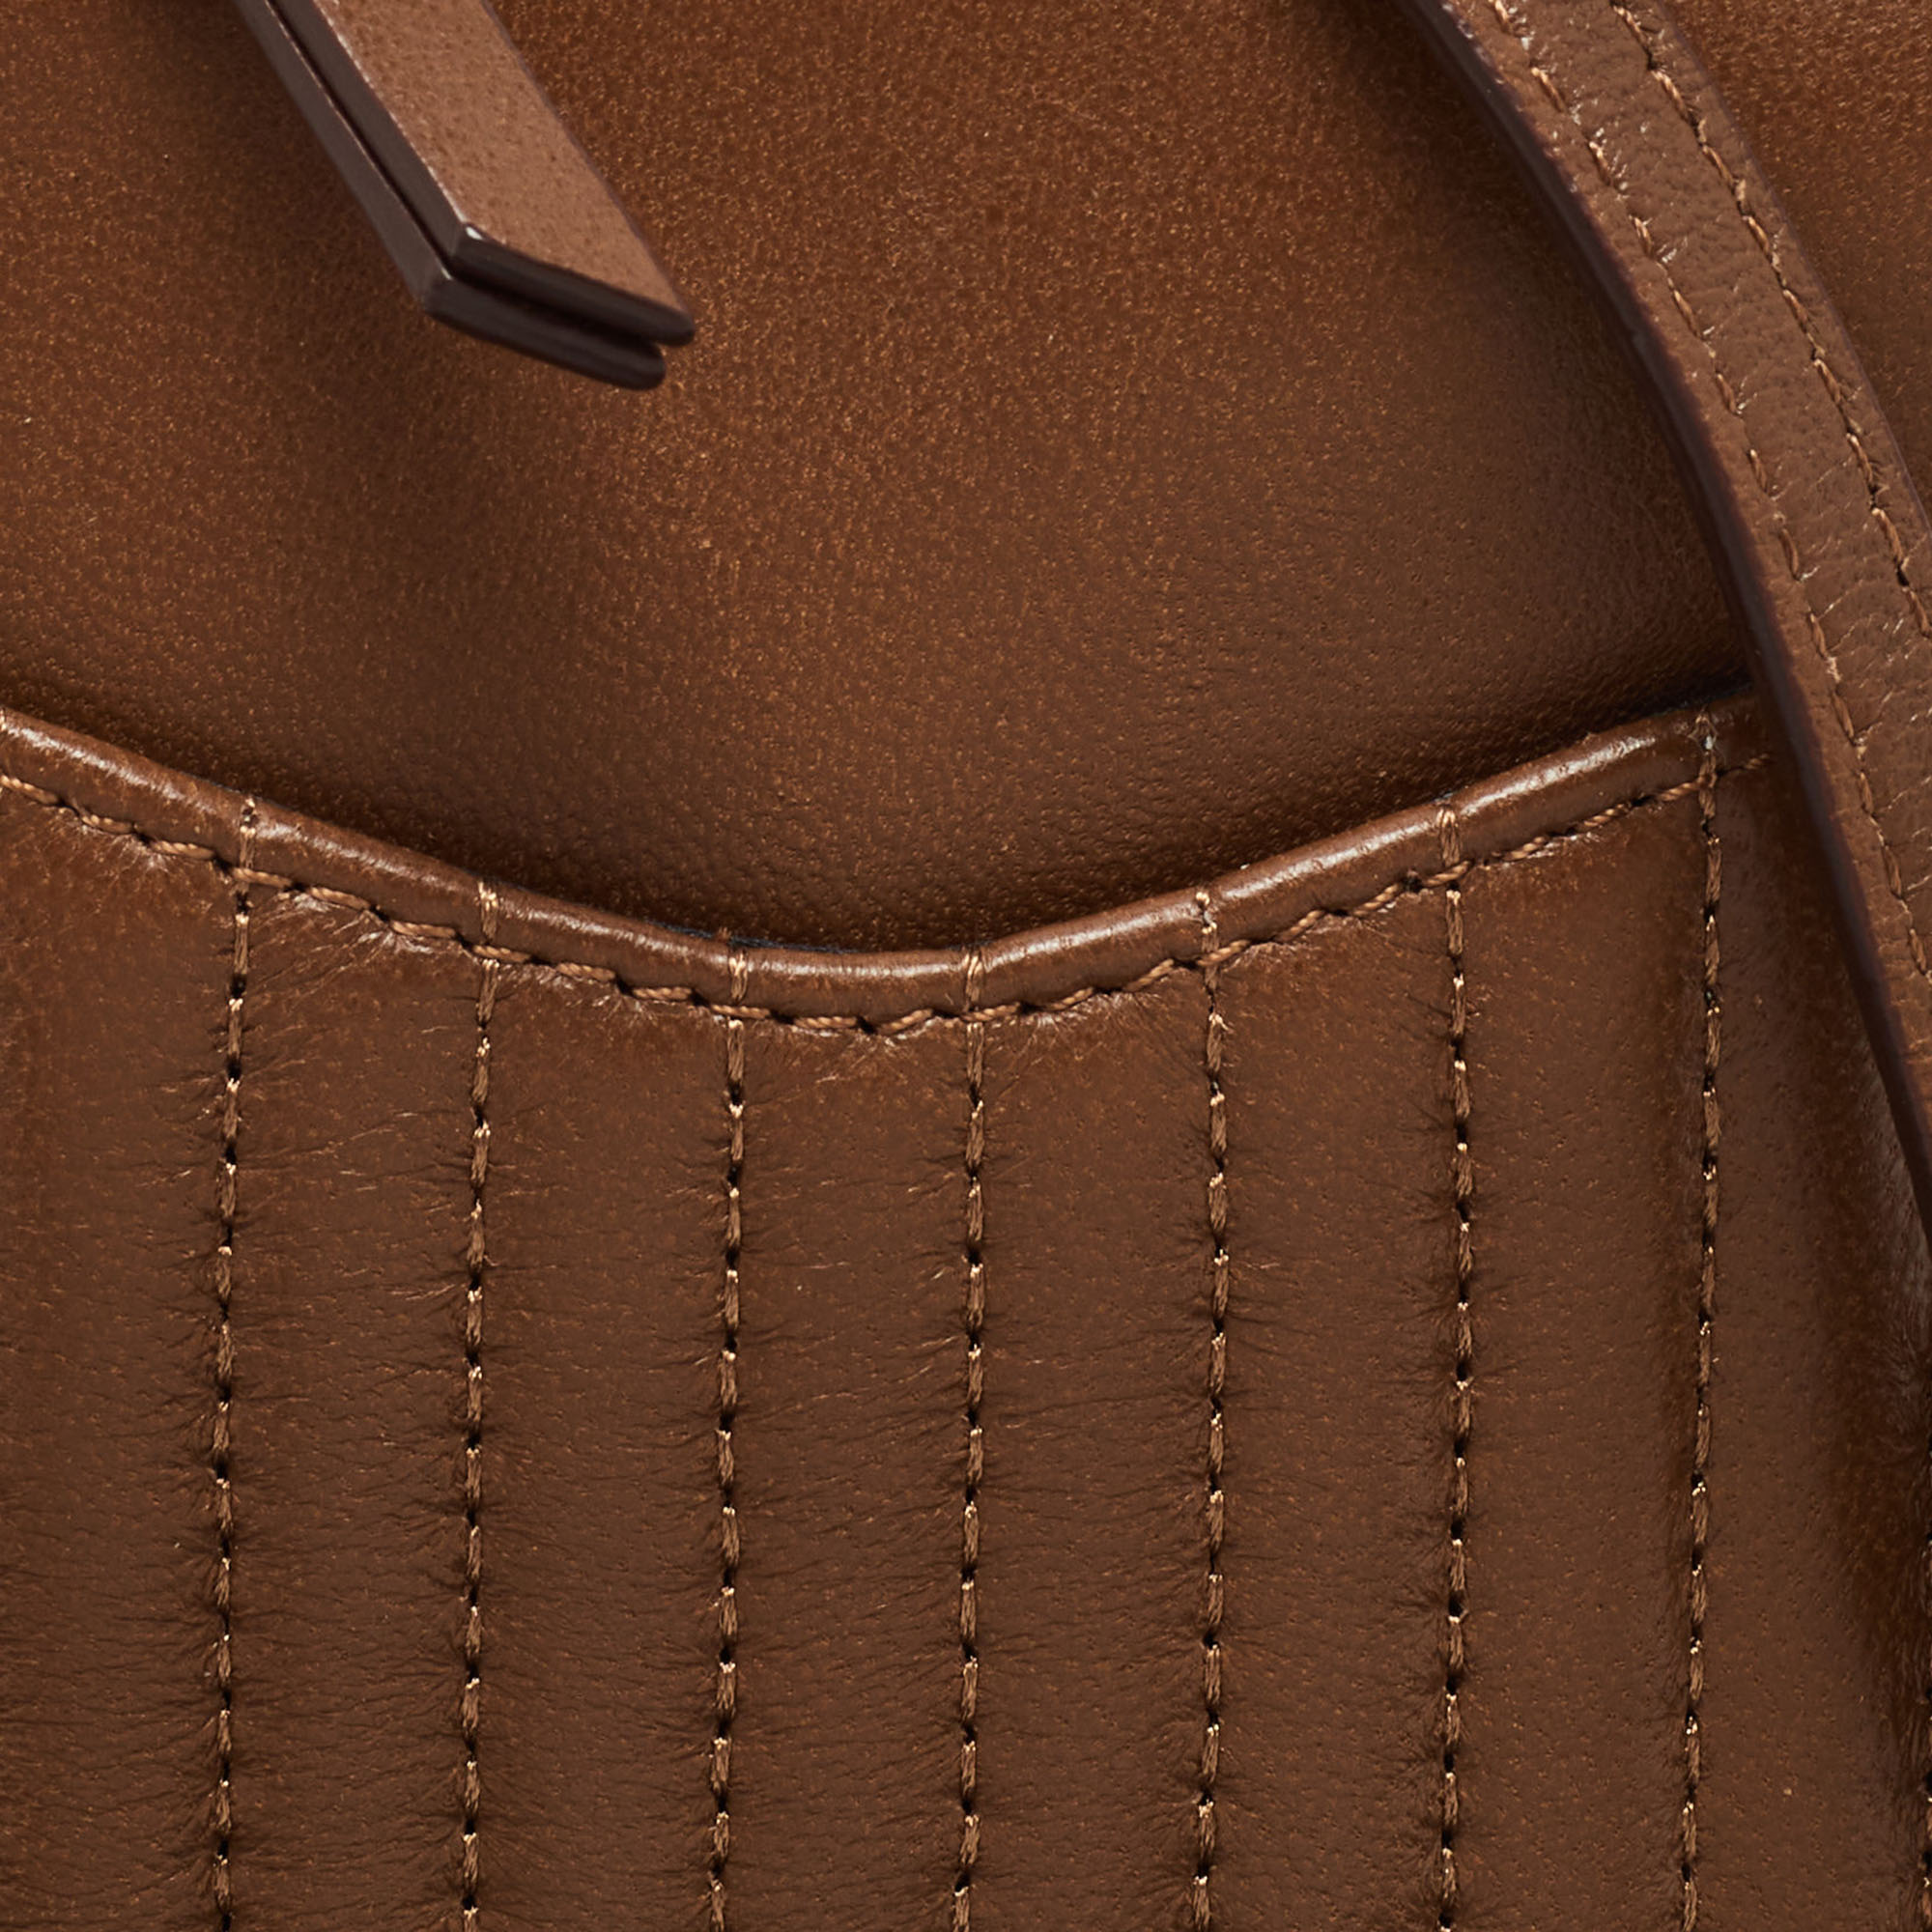 DKNY Brown Leather Phone Crossbody Bag